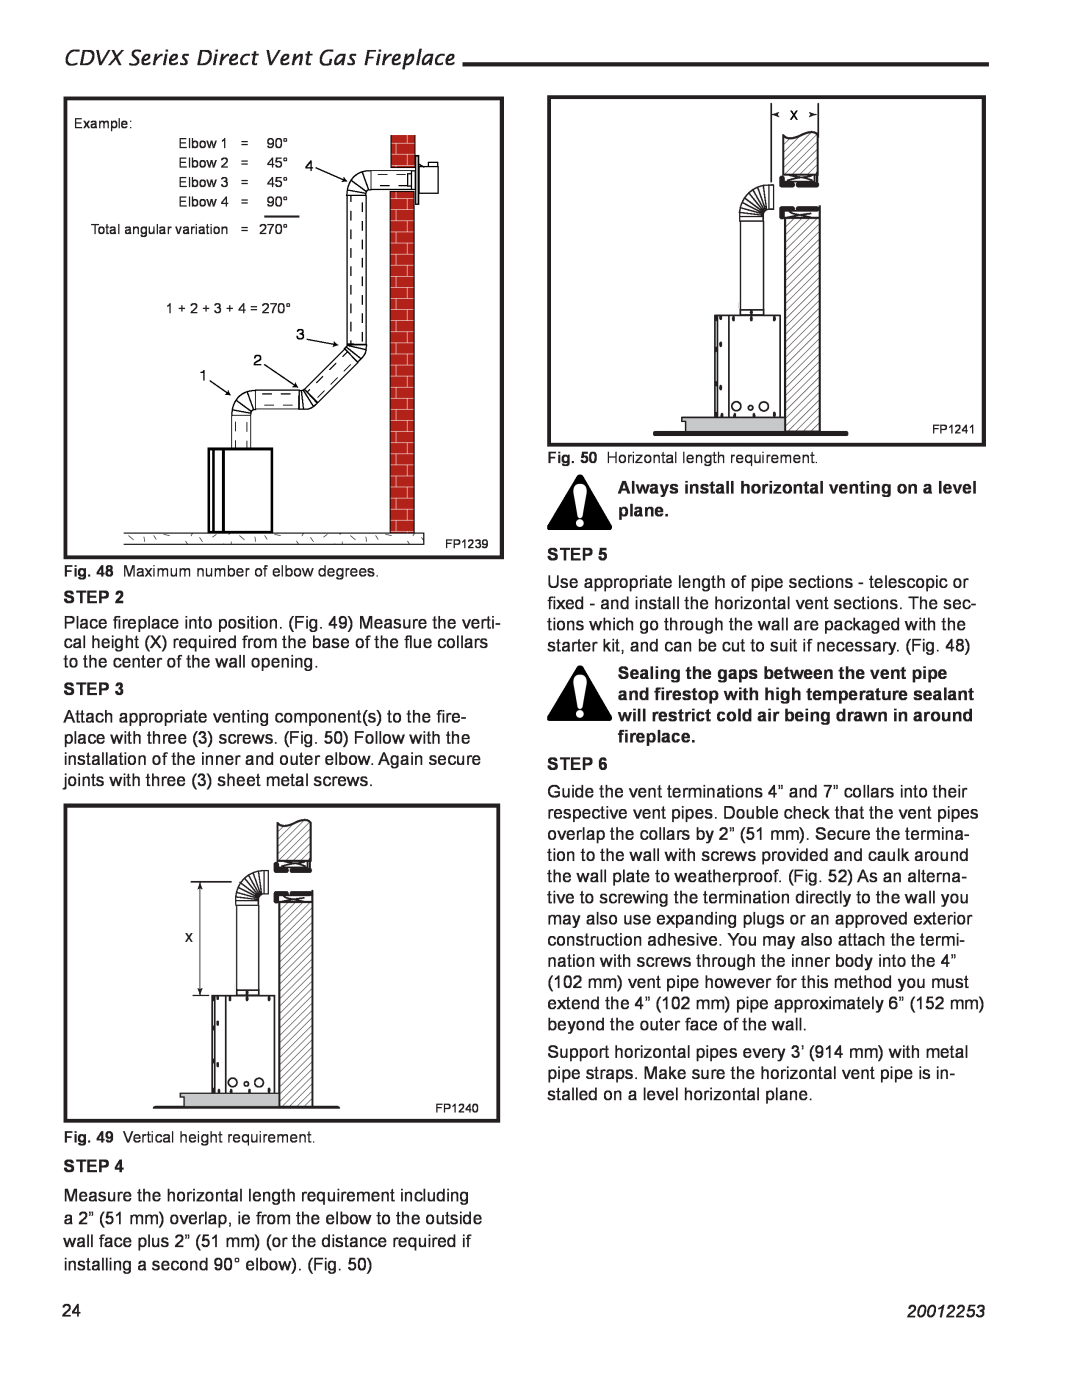 Monessen Hearth 36CDVXTRN installation instructions CDVX Series Direct Vent Gas Fireplace, Step, 20012253 